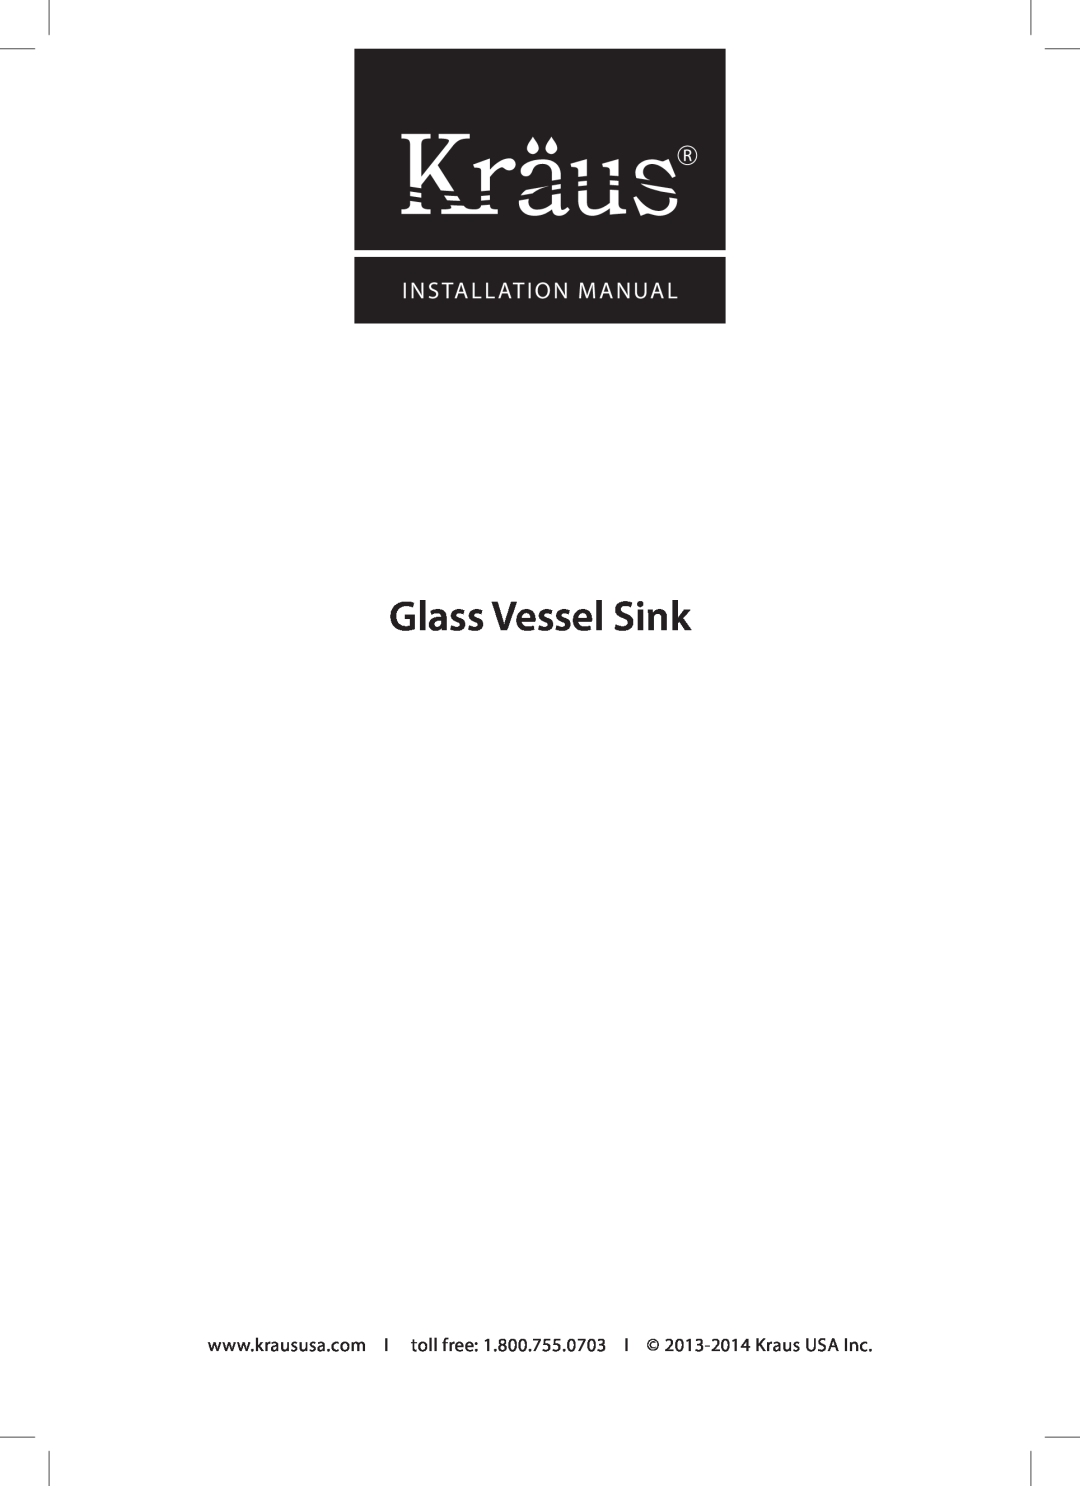 Kraus USA C-GV-398-19mm-1005ORB installation manual Glass Vessel Sink, Installation Manual 